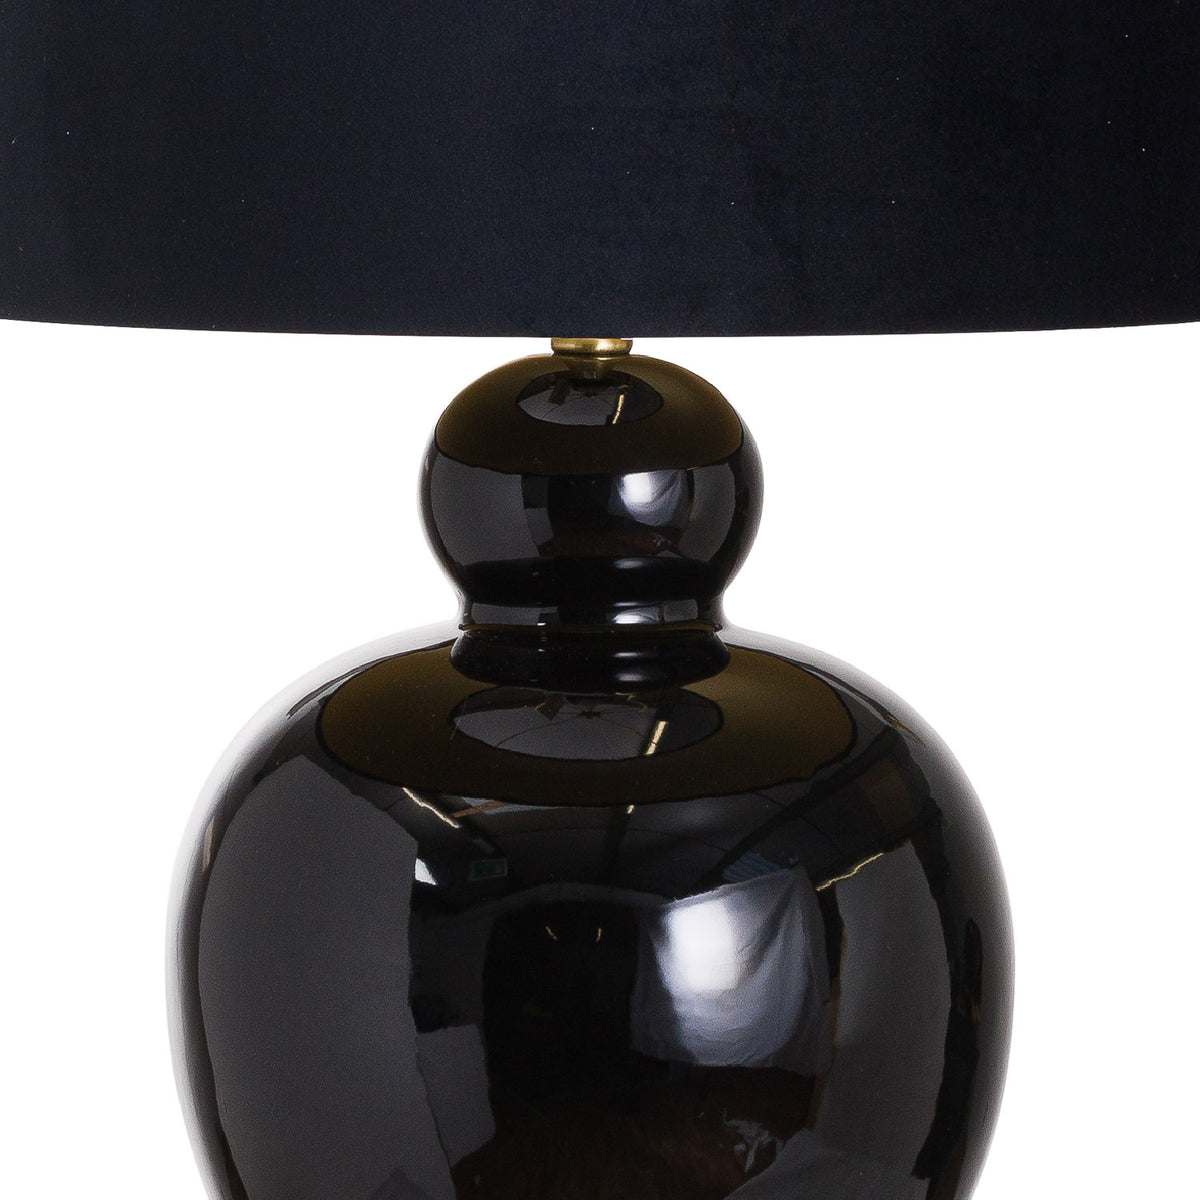 Kalvin Black Table Lamp